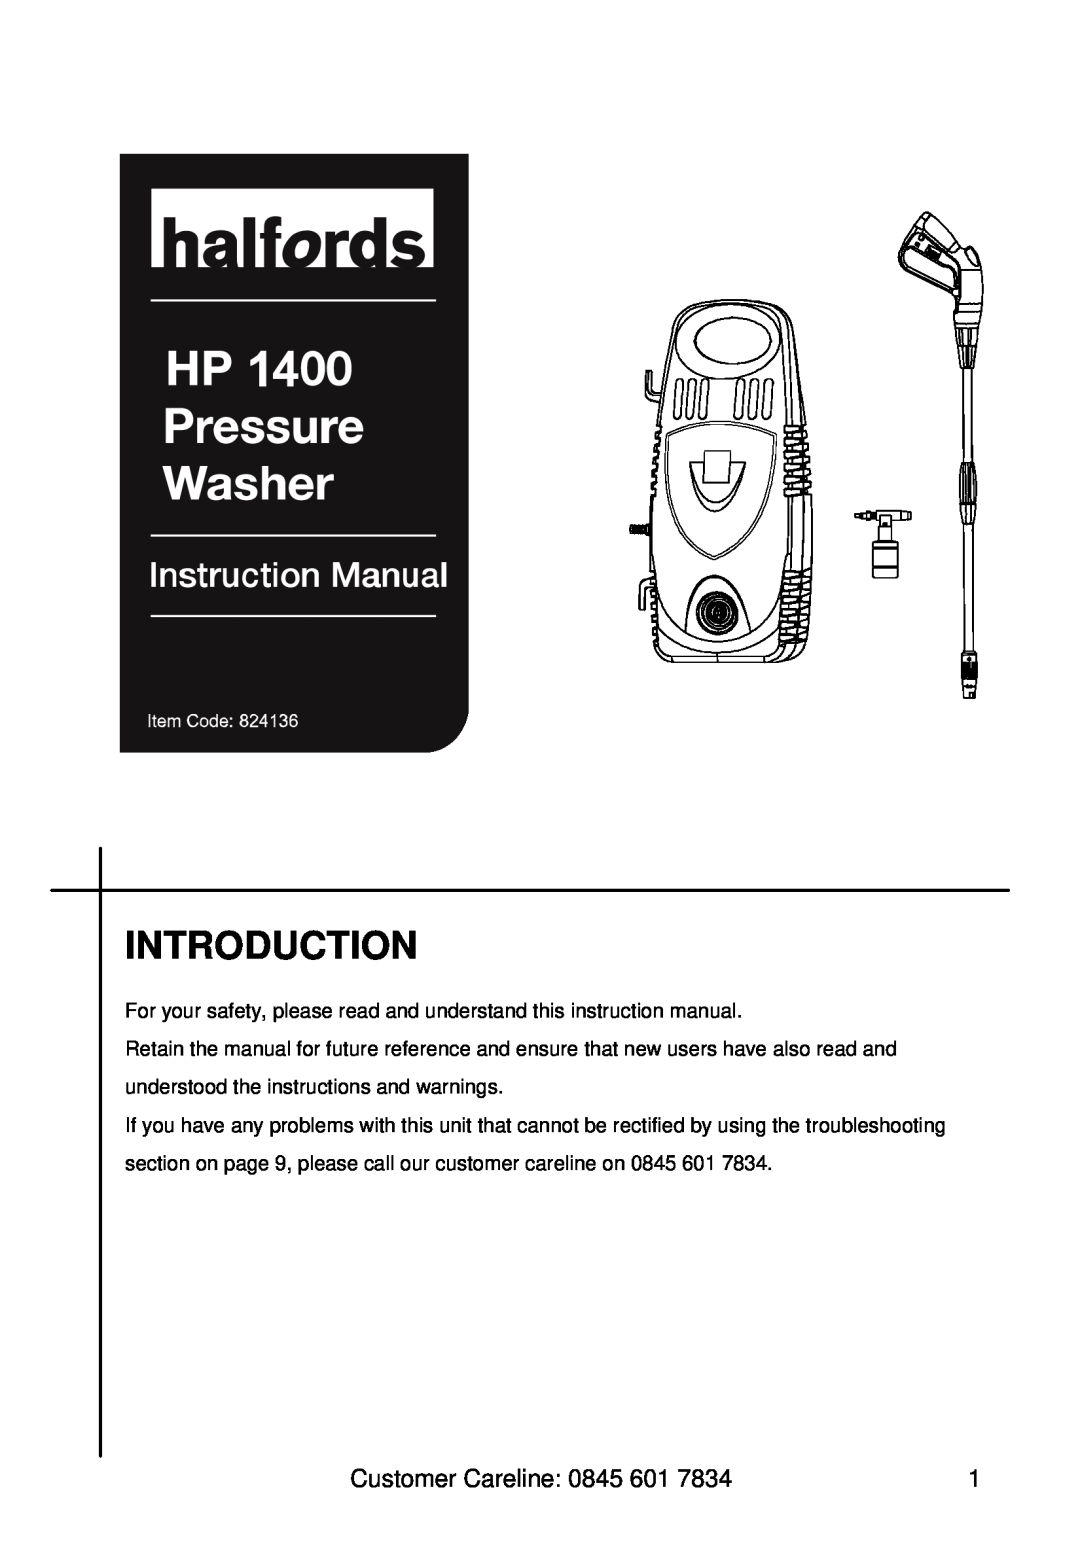 Halfords HP 1400 manual Introduction, Customer Careline 0845 601 